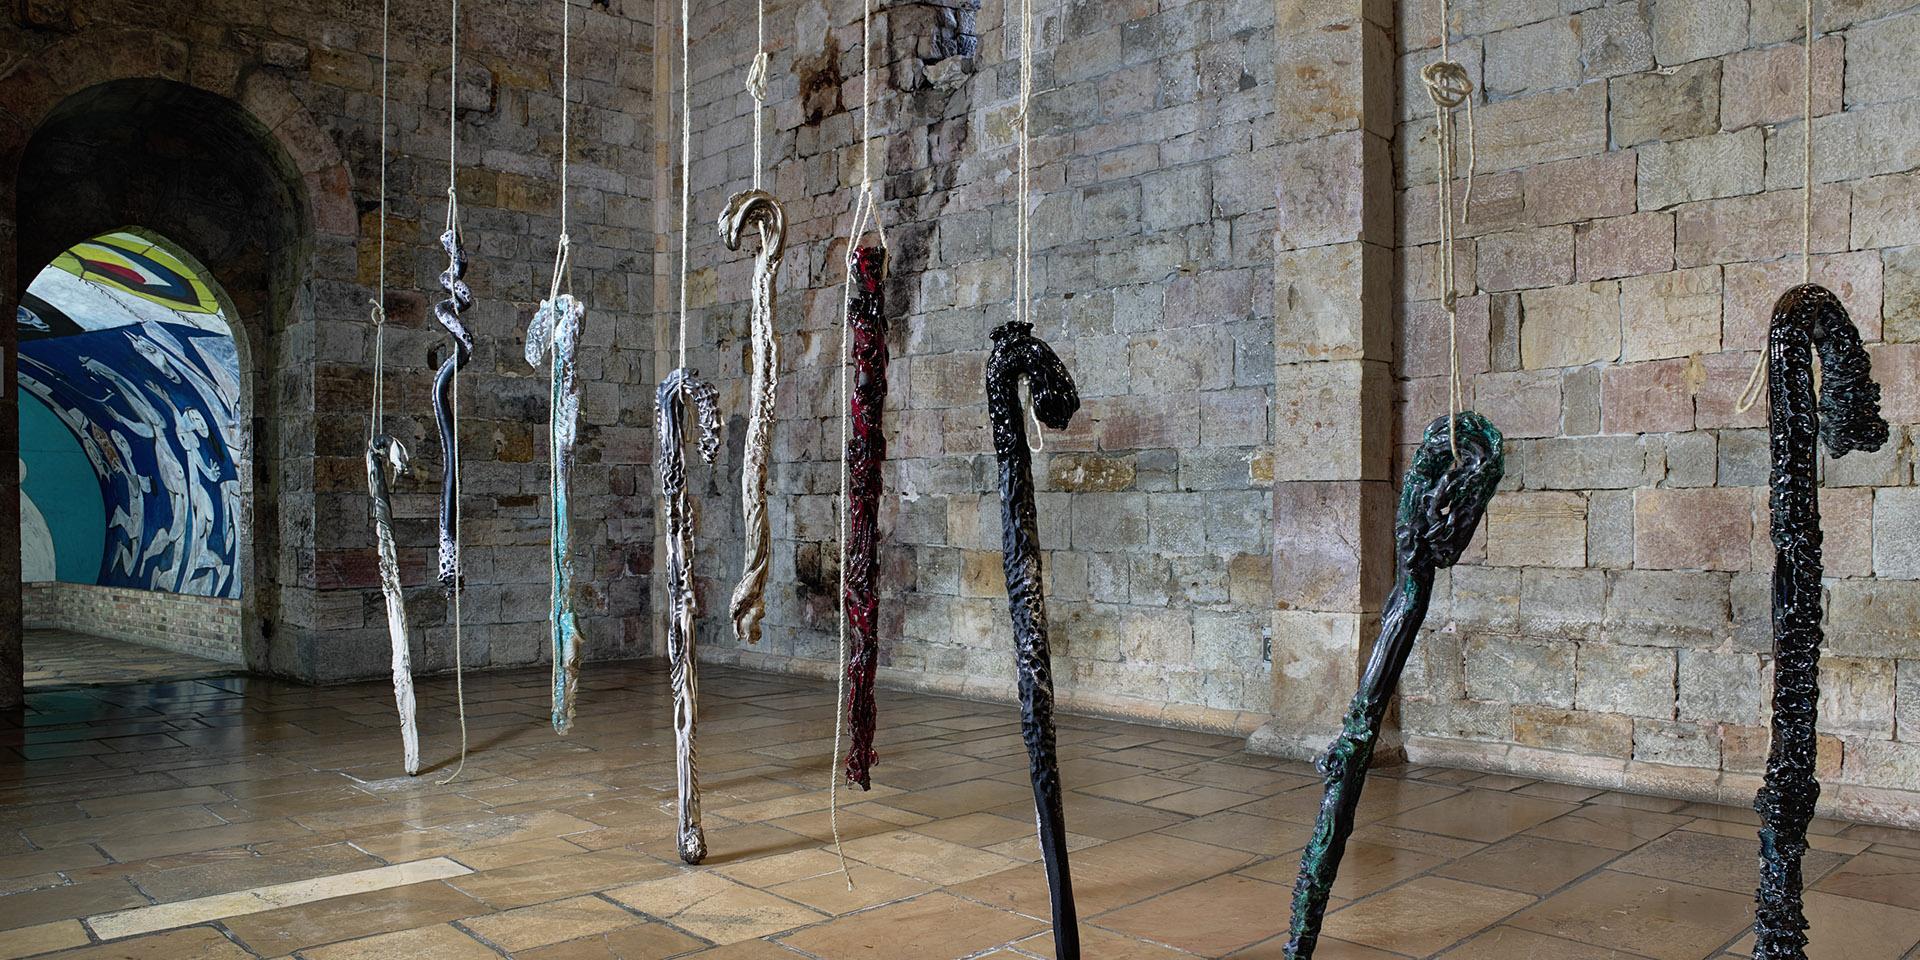 Myriam Mihindou, "Transmissions", installation, 2018. Vallauris, musée national Pablo Picasso, La Guerre et la Paix (c) ADAGP, Paris (c) Succession Picasso, 2021.